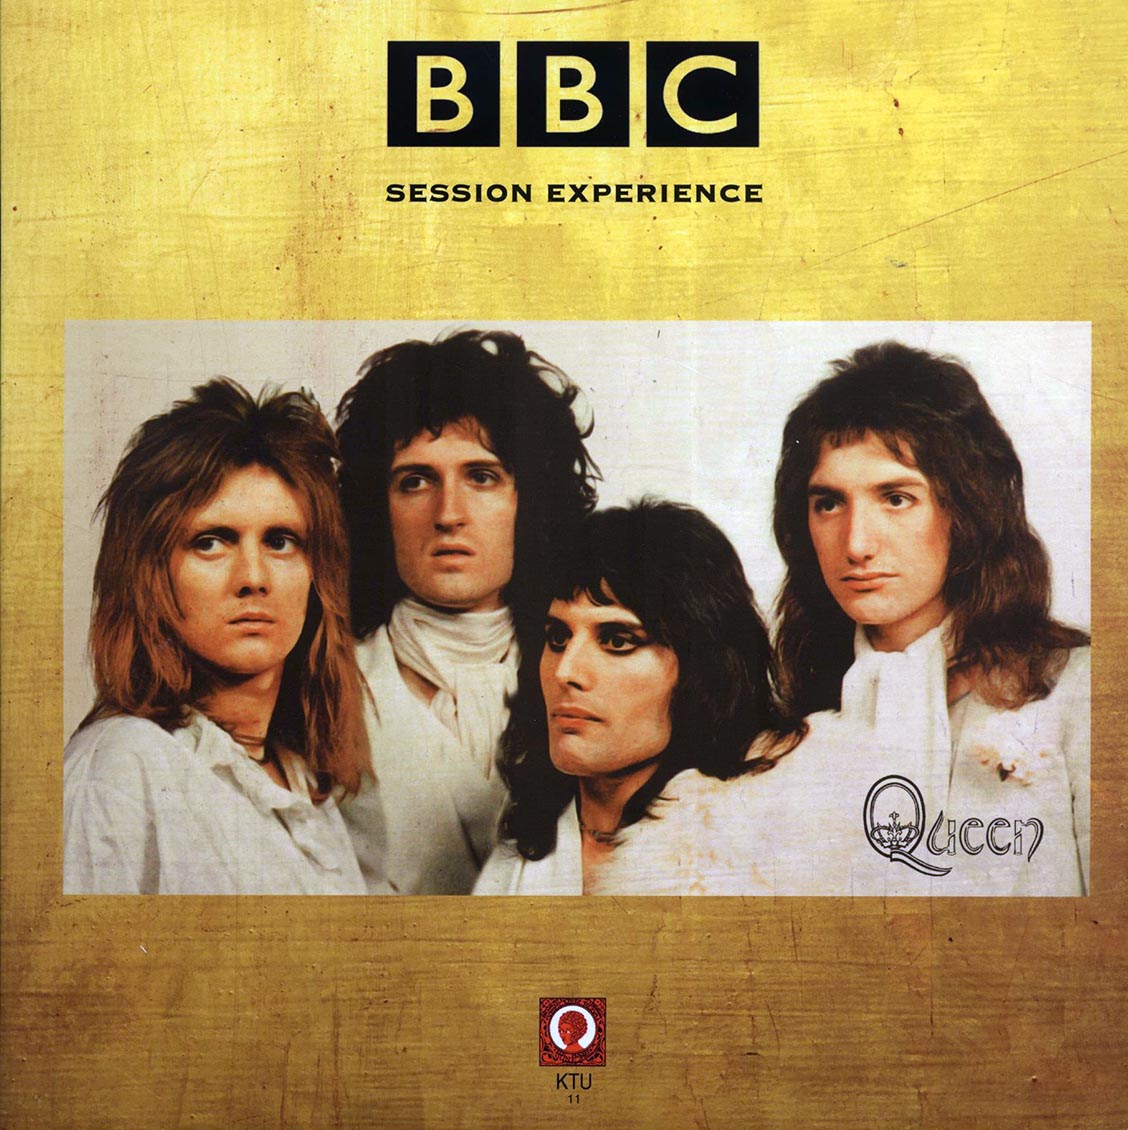 Queen - Session Experience: Goldon Green Hippodrome, London, September 13, 1973